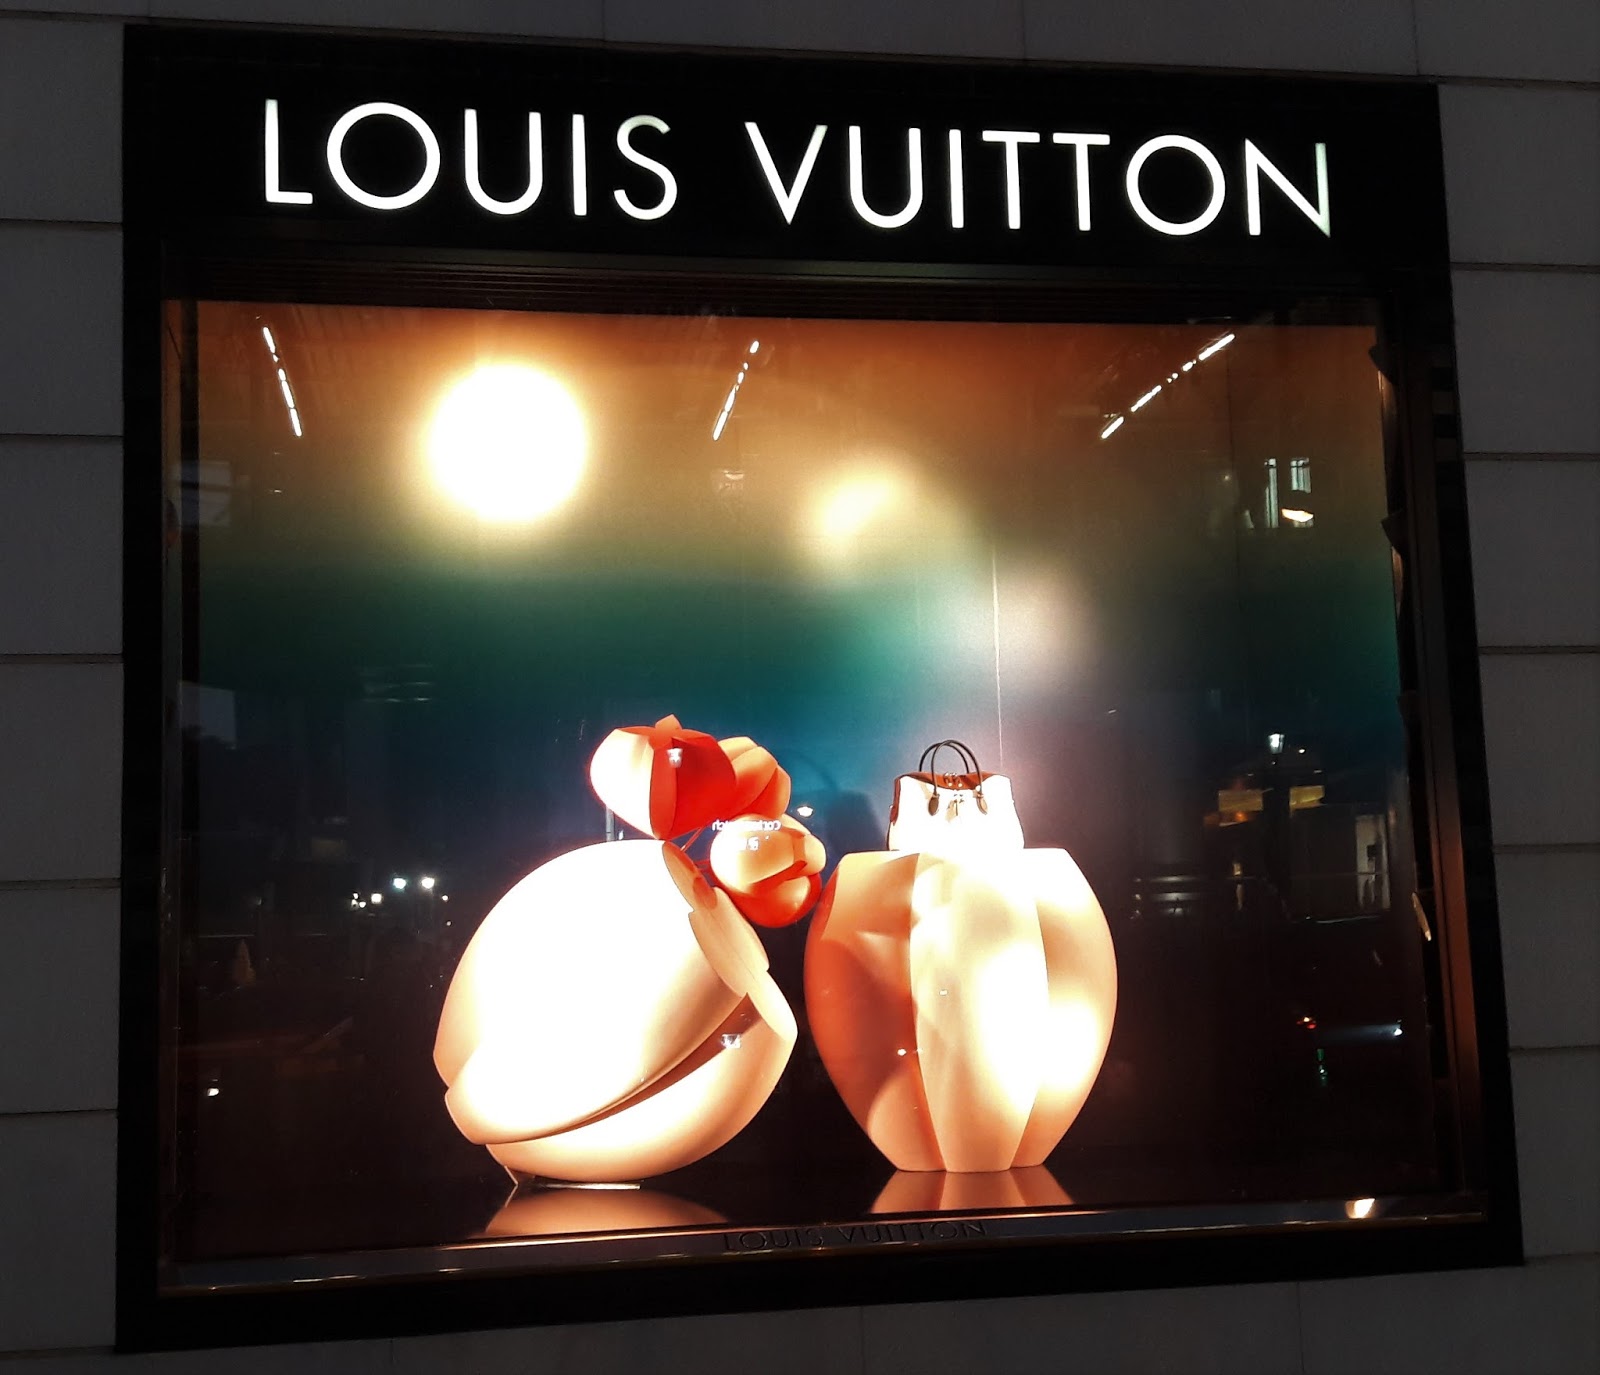 LOUIS VUITTON windows in Bangkok